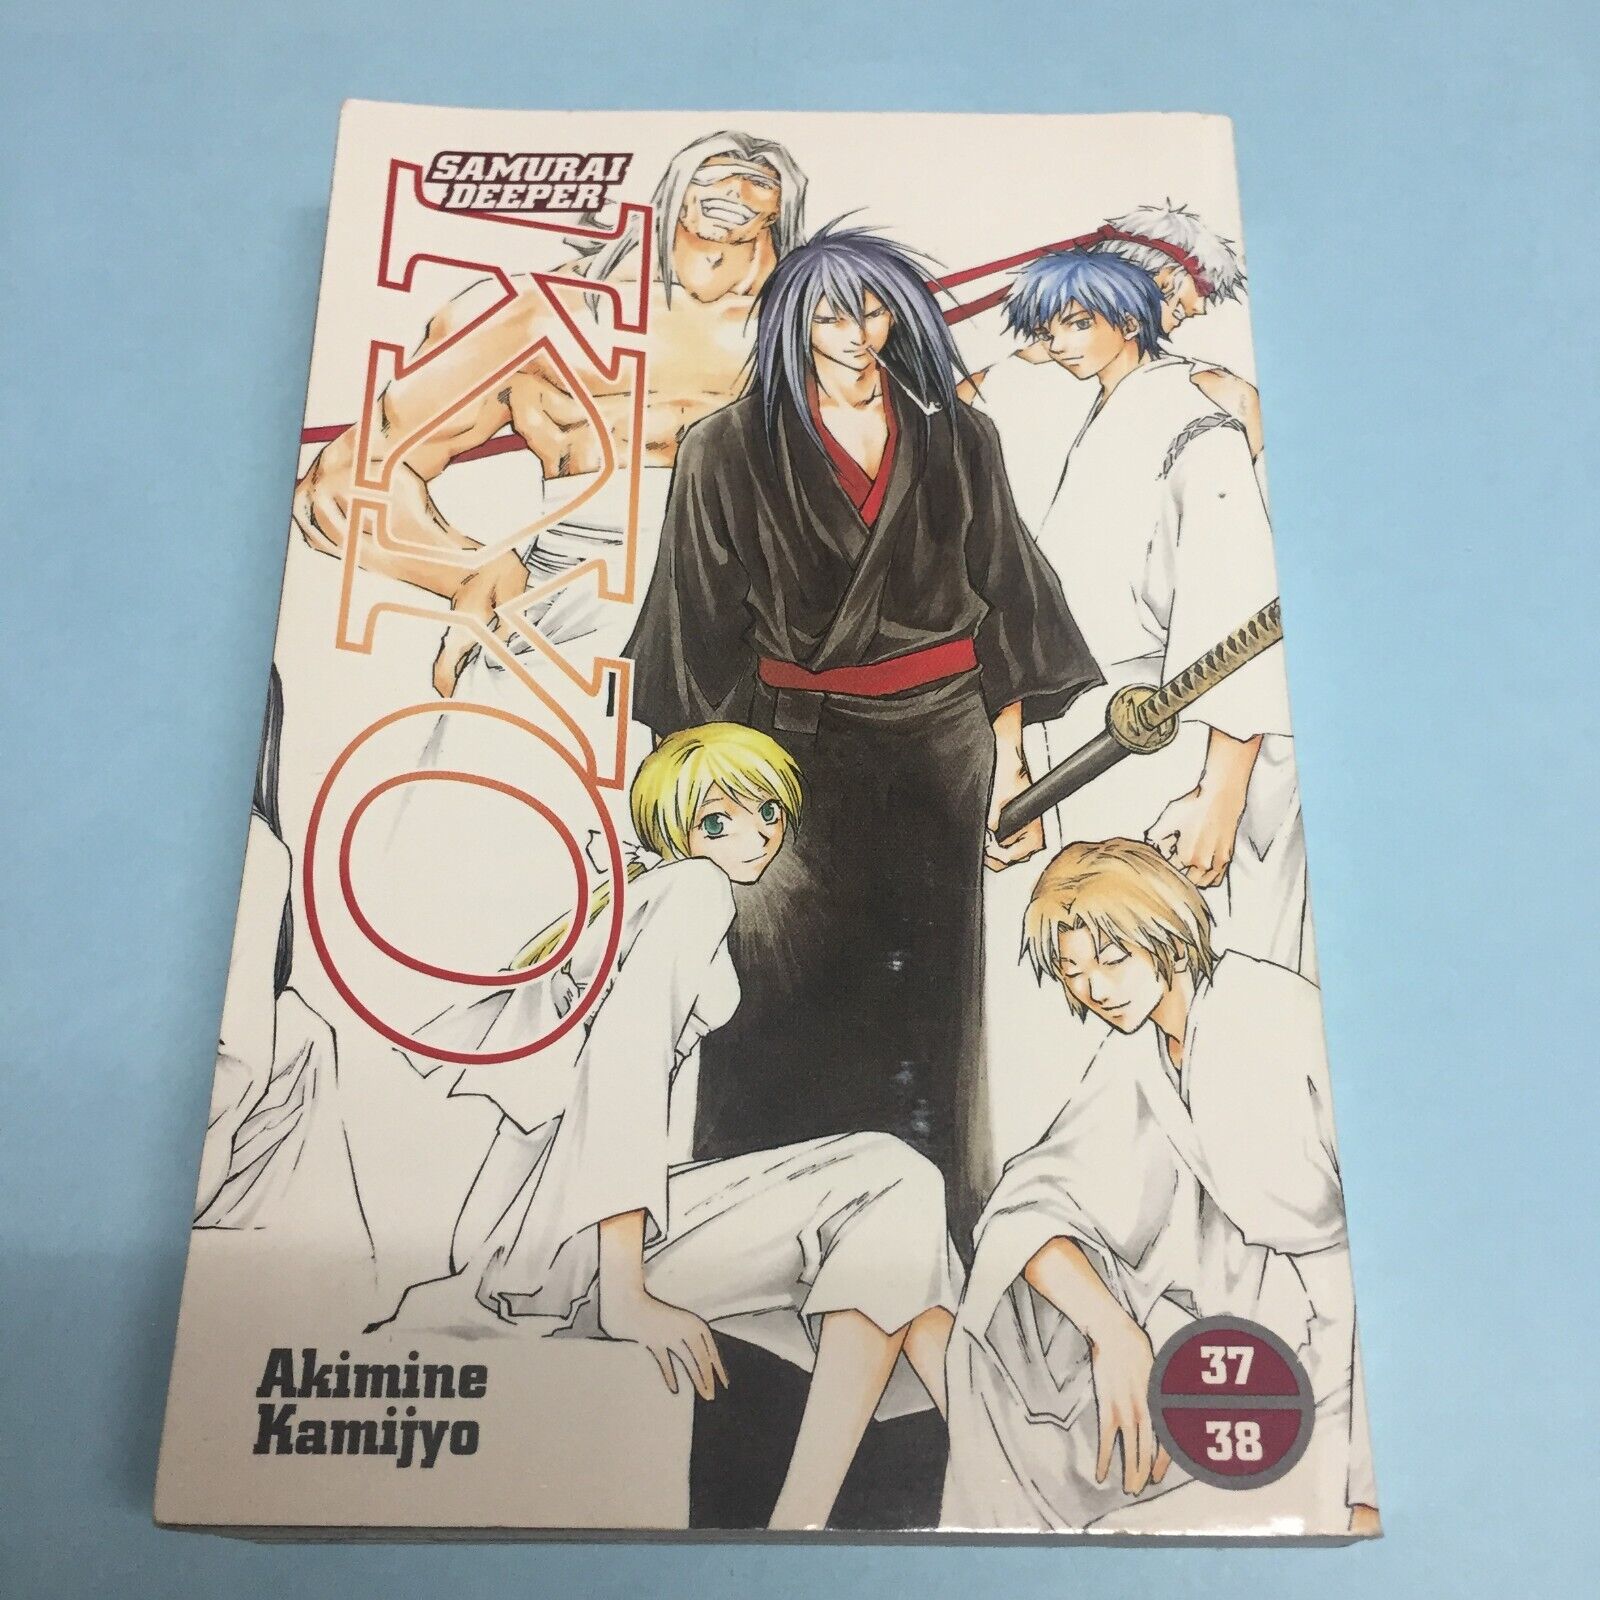 Samurai Deeper Kyo Volume 37-38 Manga English Vol Akimine Kamijyo